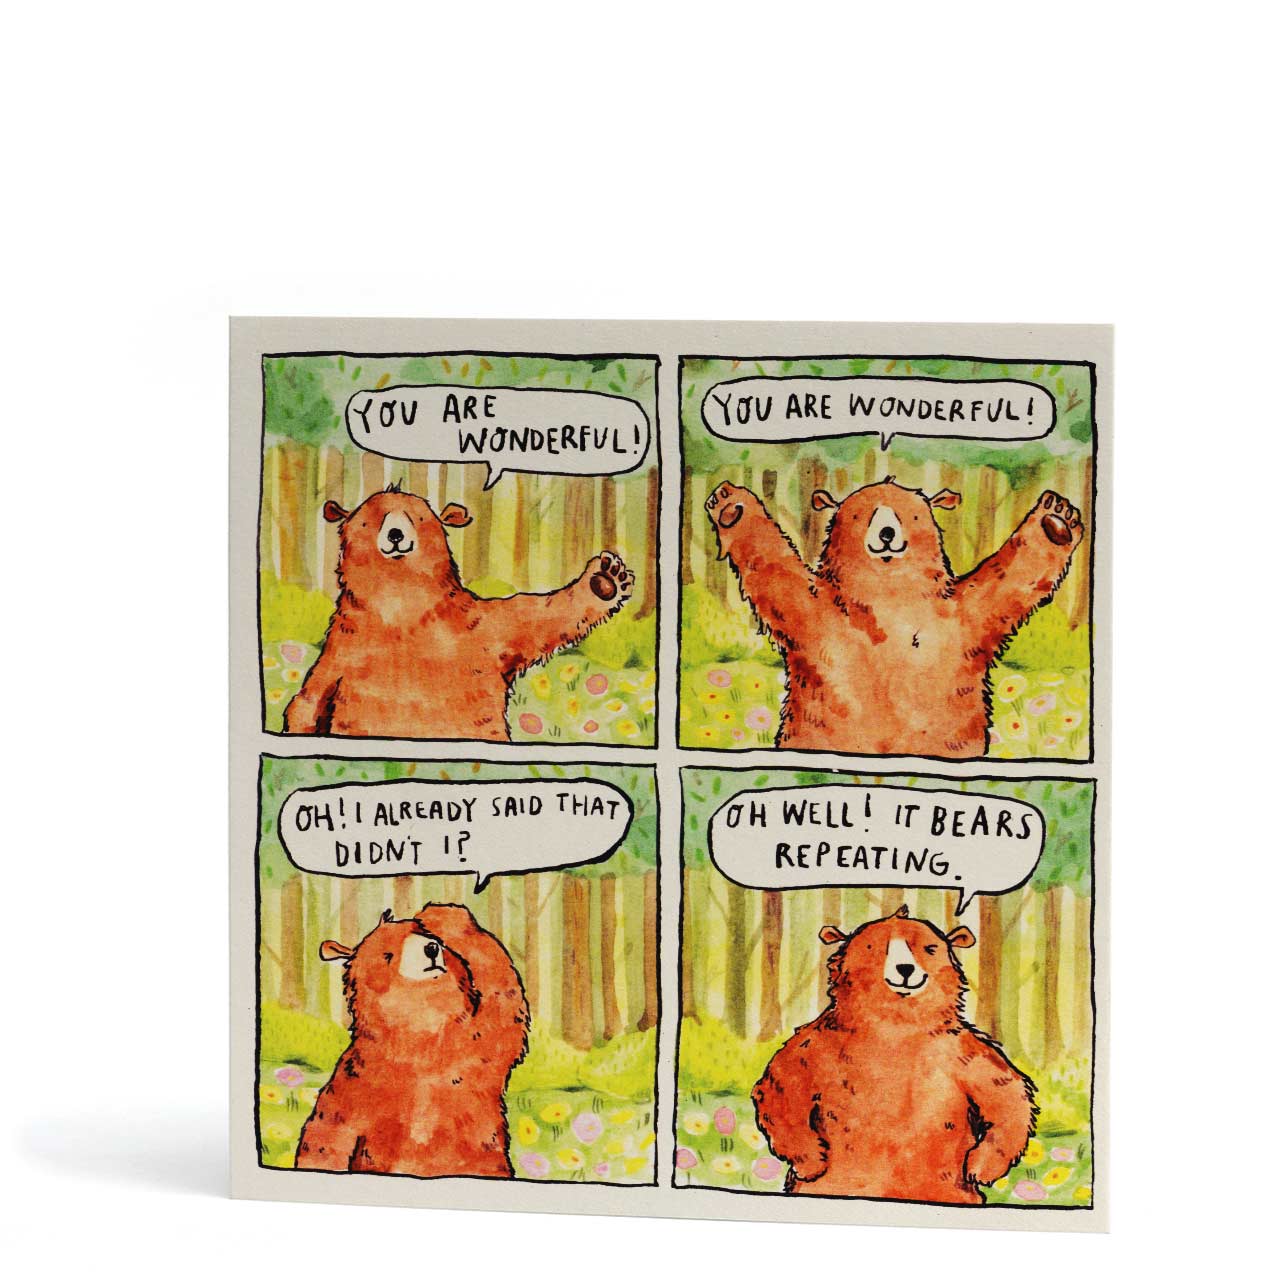 Bears Repeating Wonderful Card